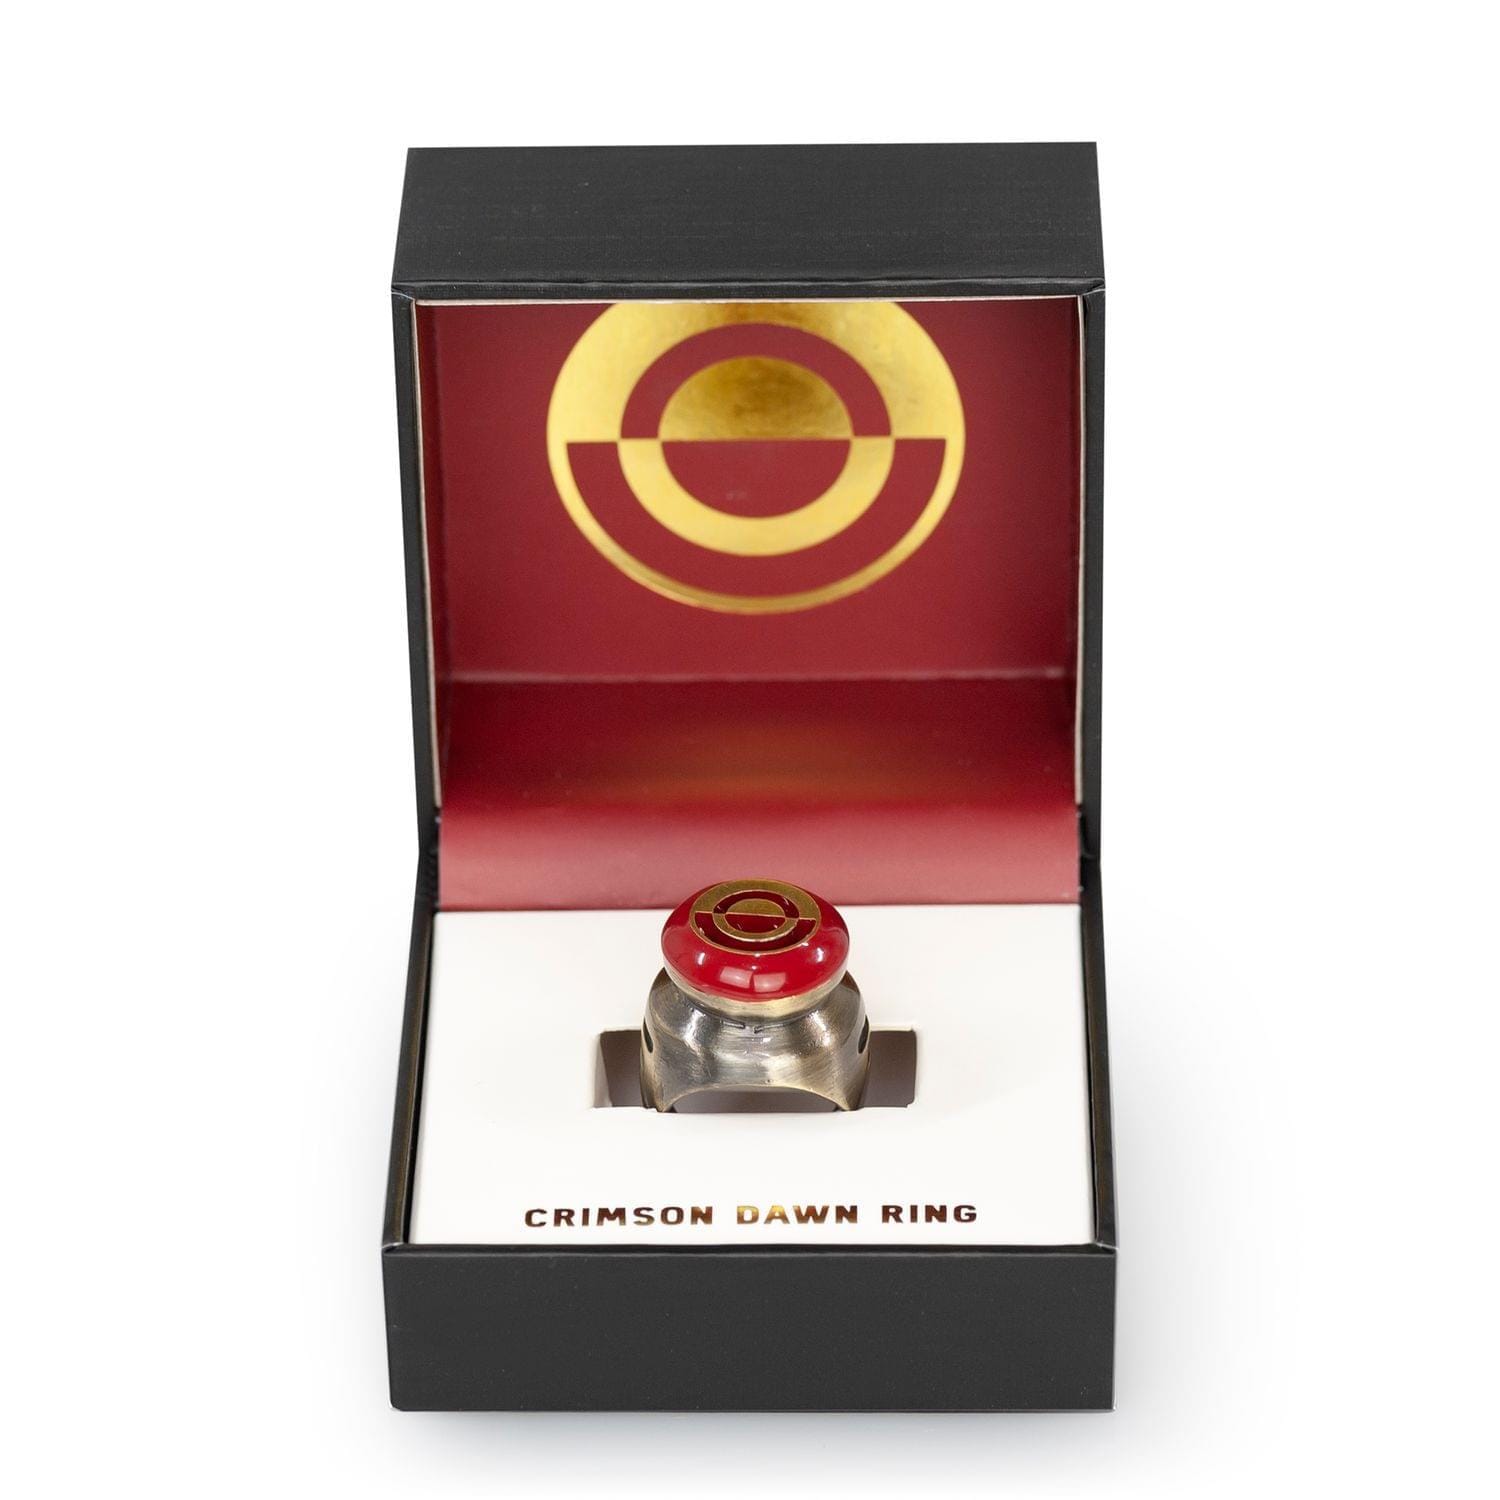 Star Wars Crimson Dawn Signet Ring Prop Replica - Size 9